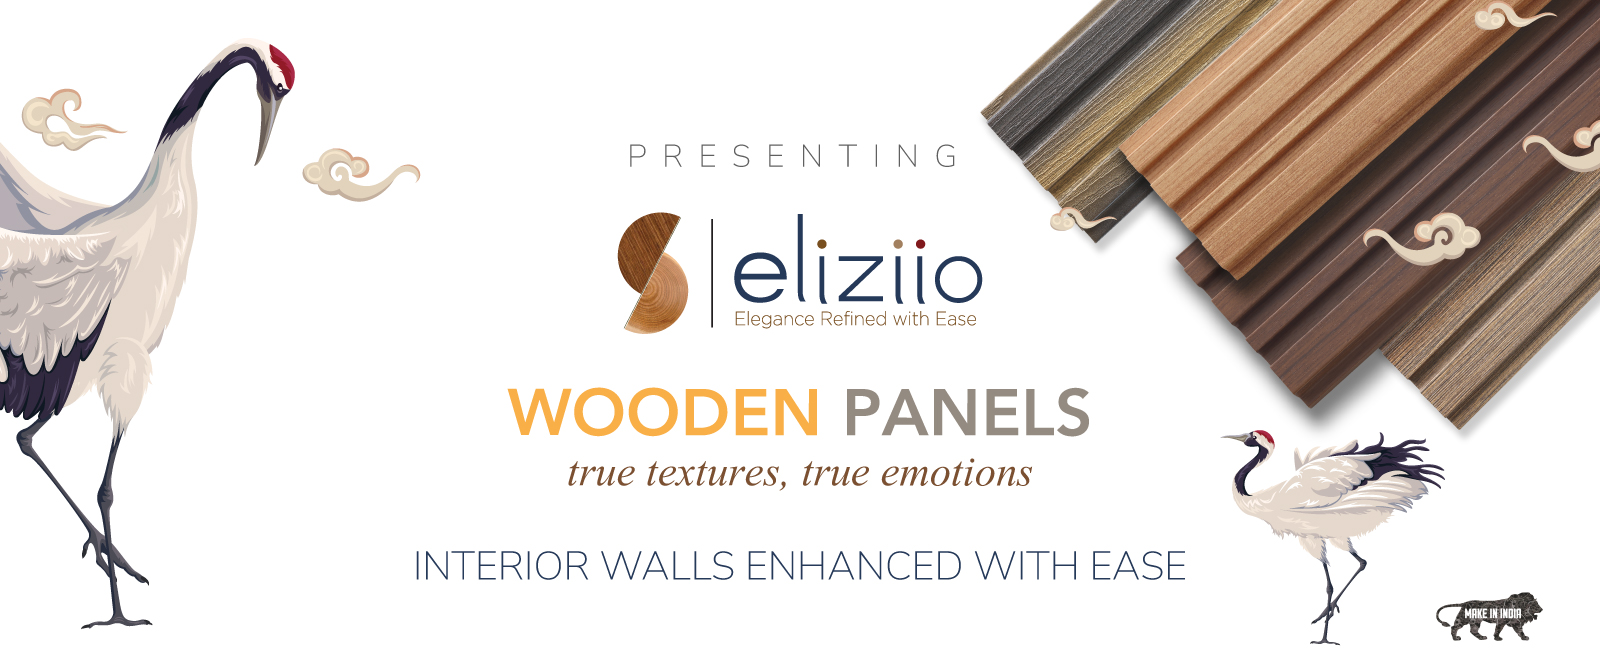 ELIZIIO Wooden Panel home banner